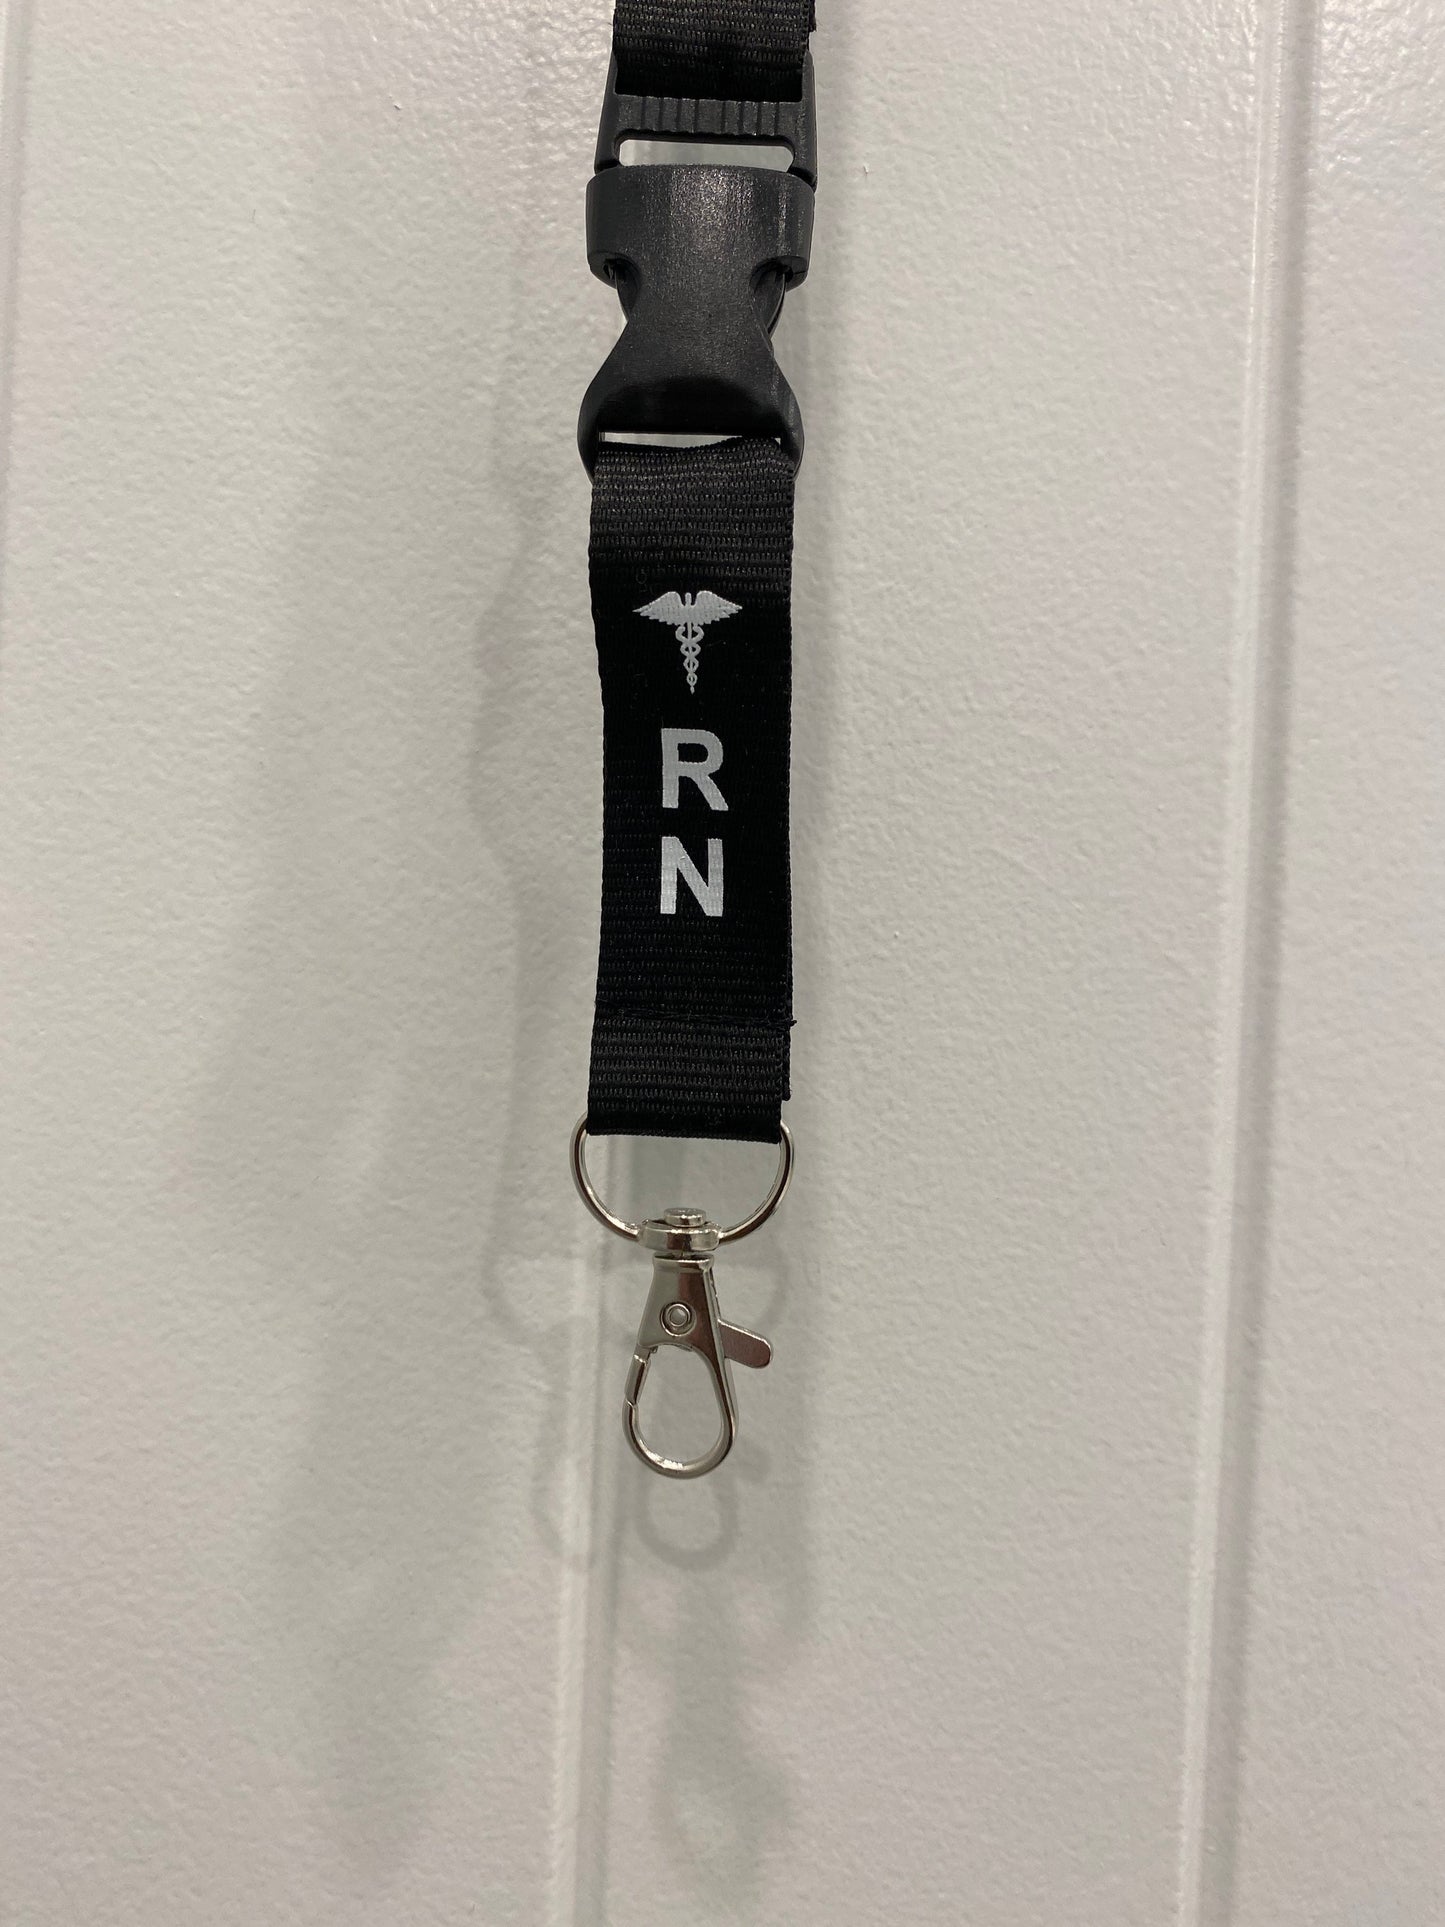 LONG RN LANYARD Badge holder/key holder, 1 breakaway, Nurse gift